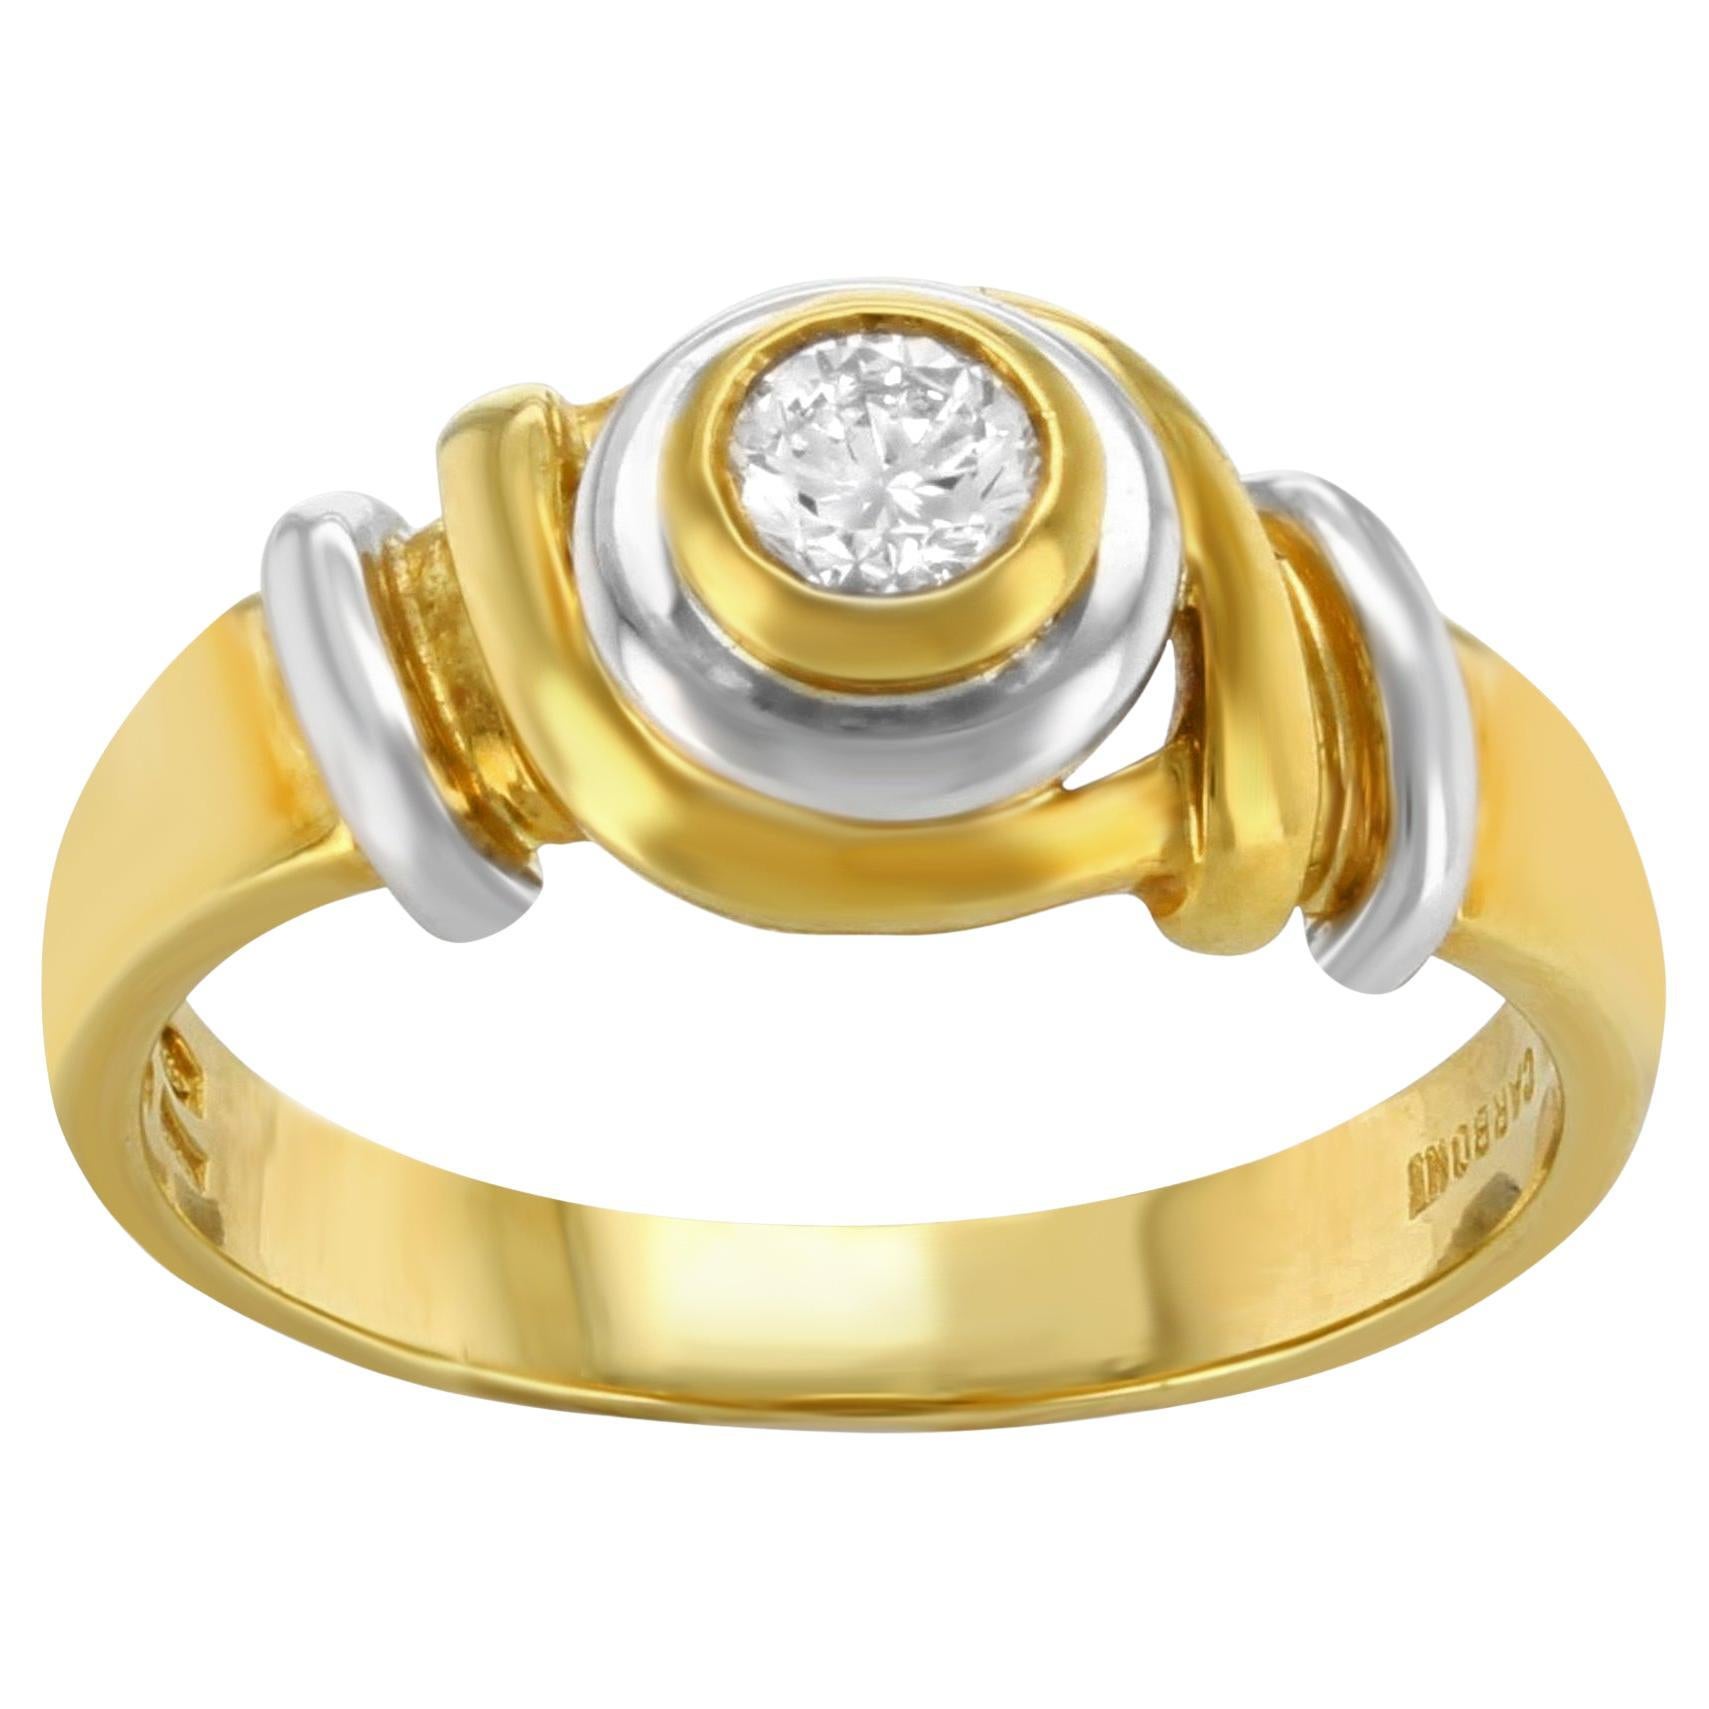 Rachel Koen Diamond Ladies Ring 18K Yellow White Gold 0.20 Cttw